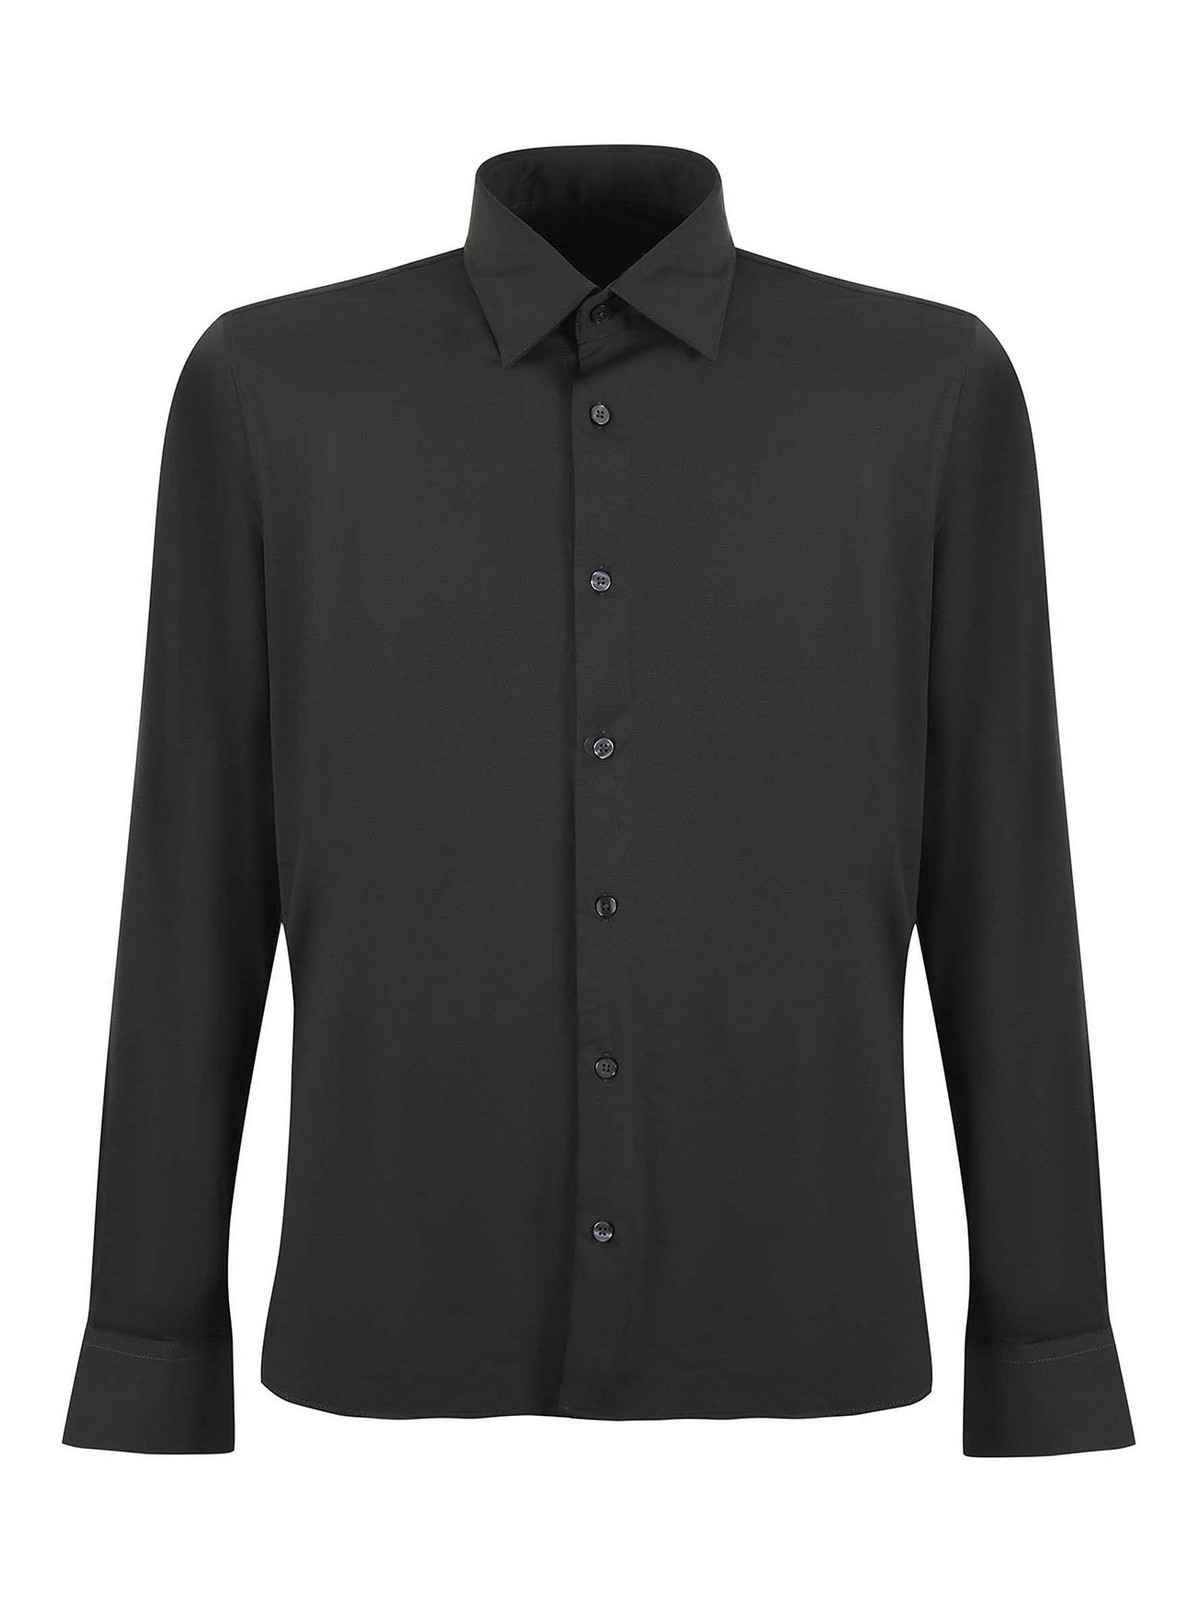 Rrd Roberto Ricci Designs Jersey Shirt In Black